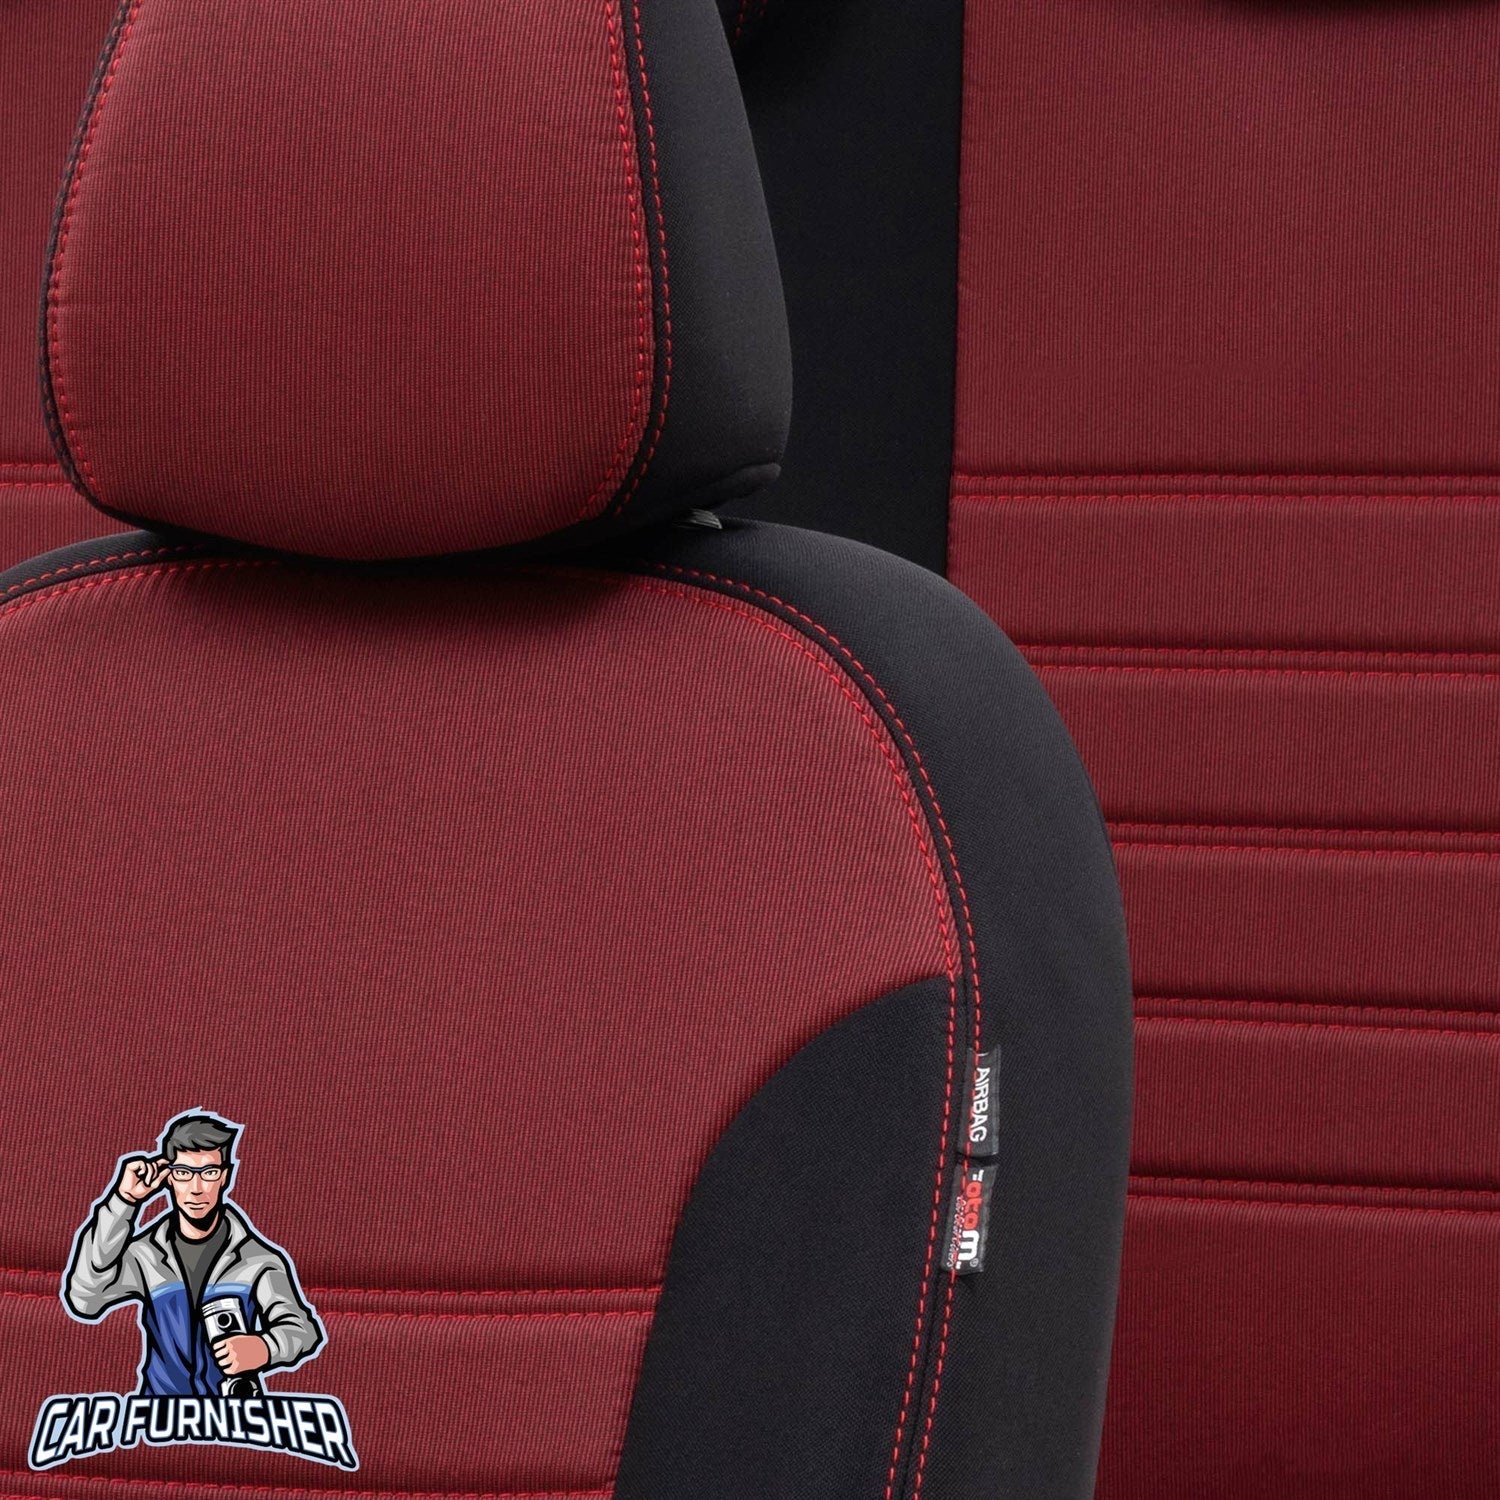 Ford C-Max Seat Covers Original Jacquard Design Red Jacquard Fabric